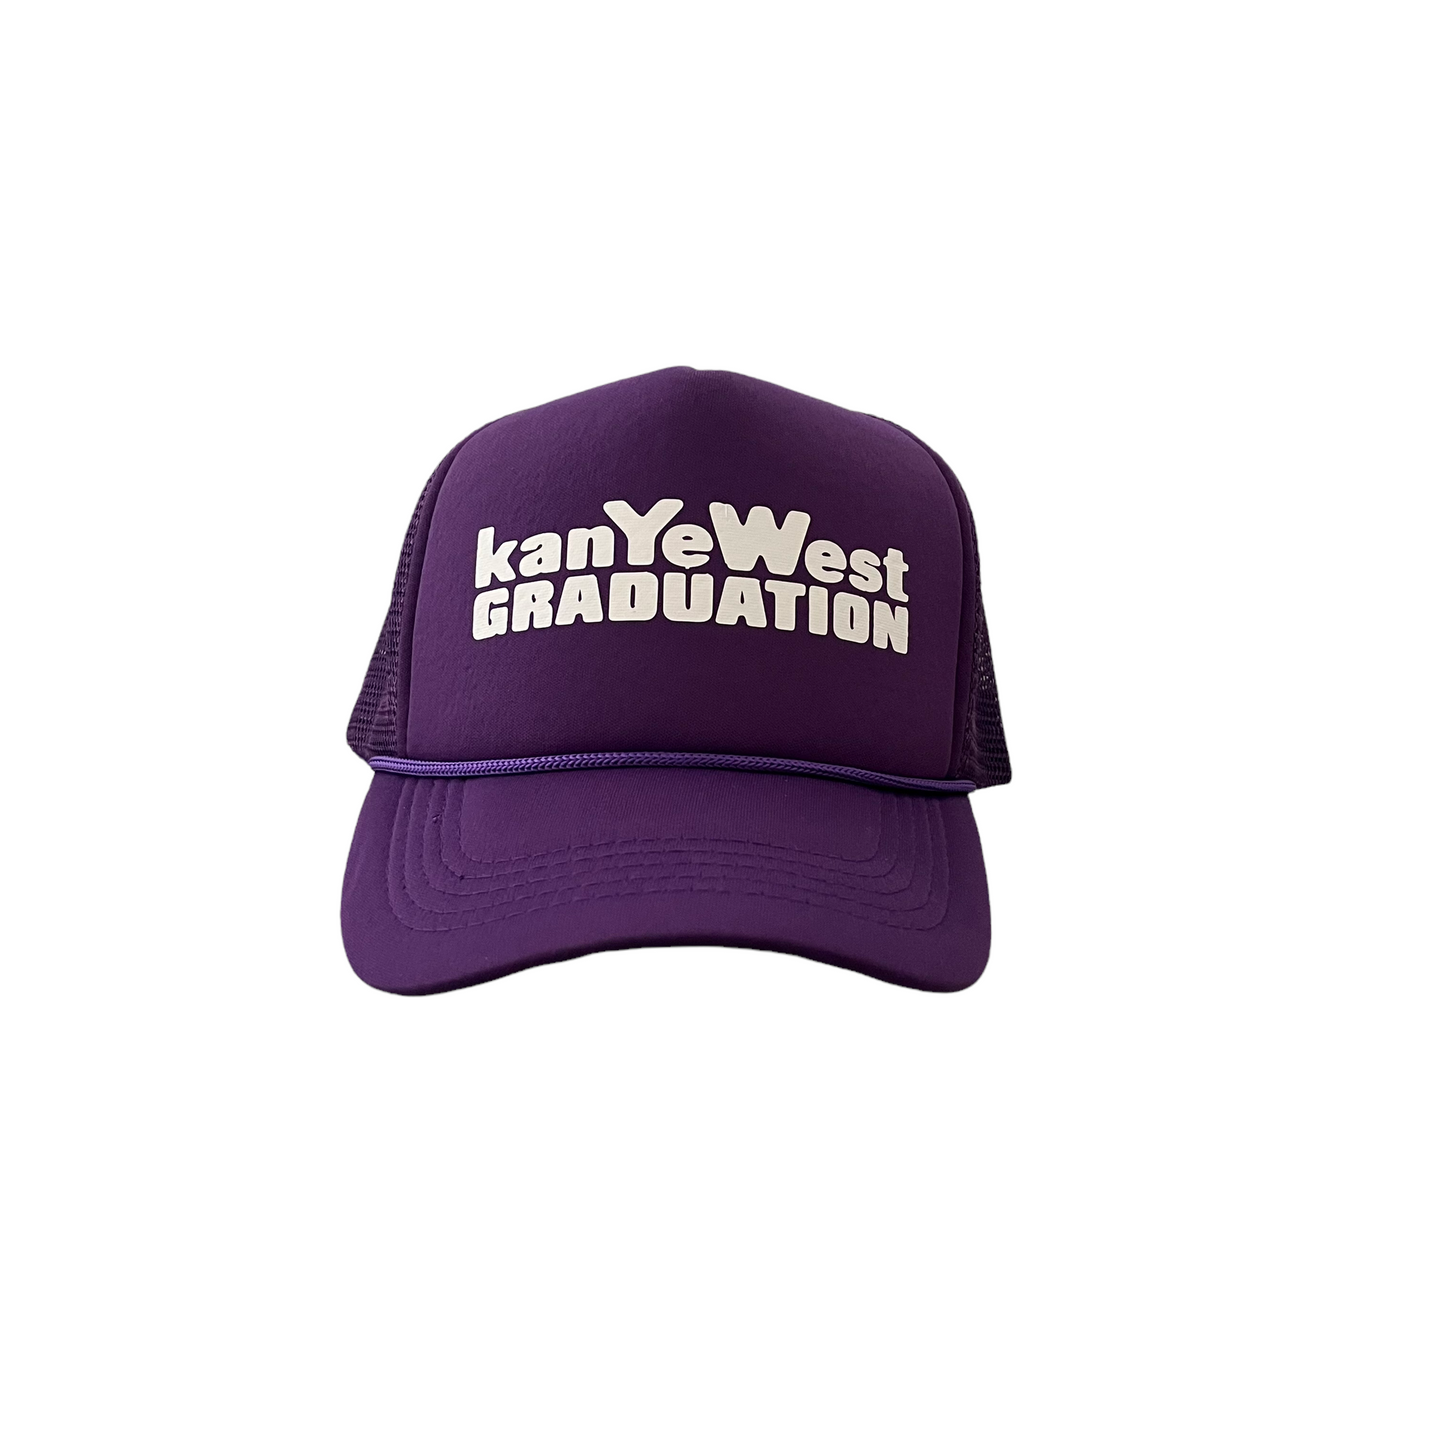 kanye west graduation hat